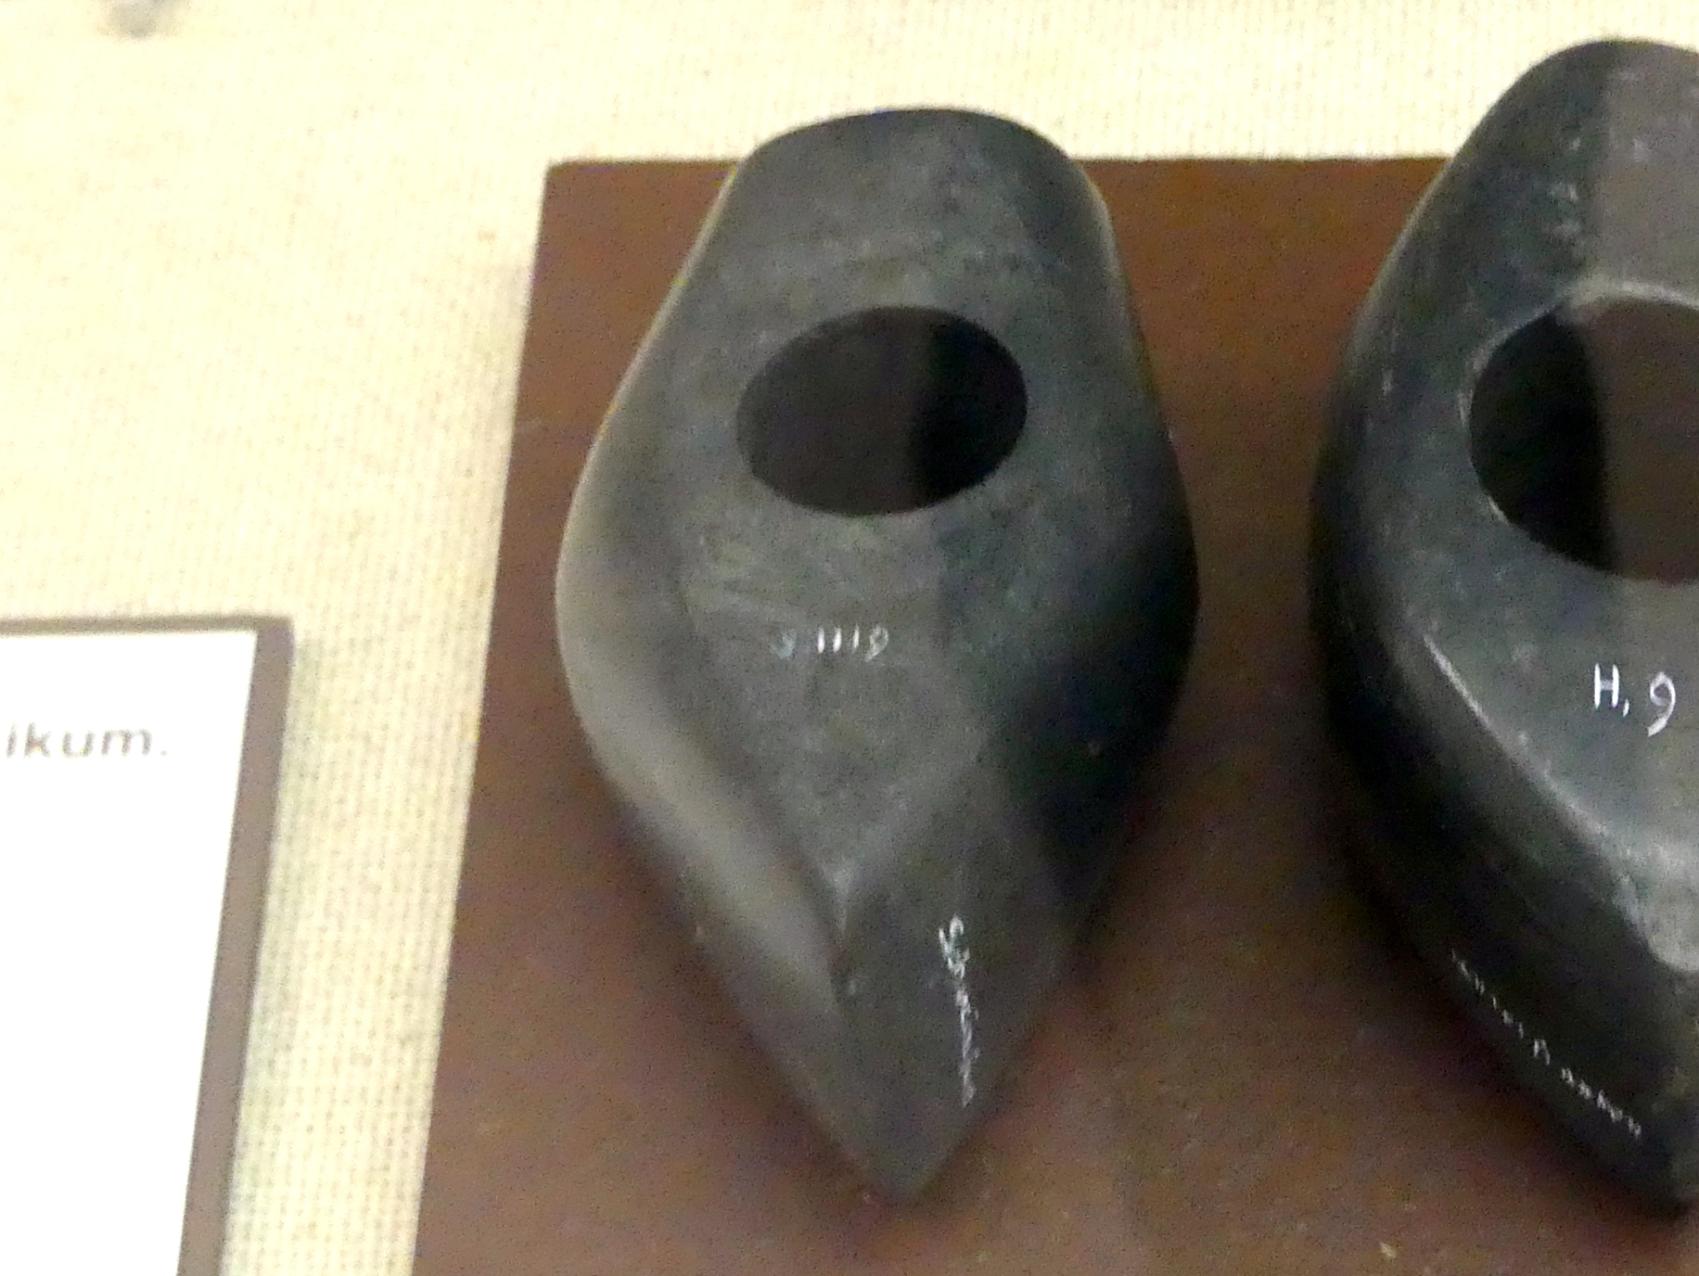 Hammeraxt, Endneolithikum, 2800 - 1700 v. Chr.